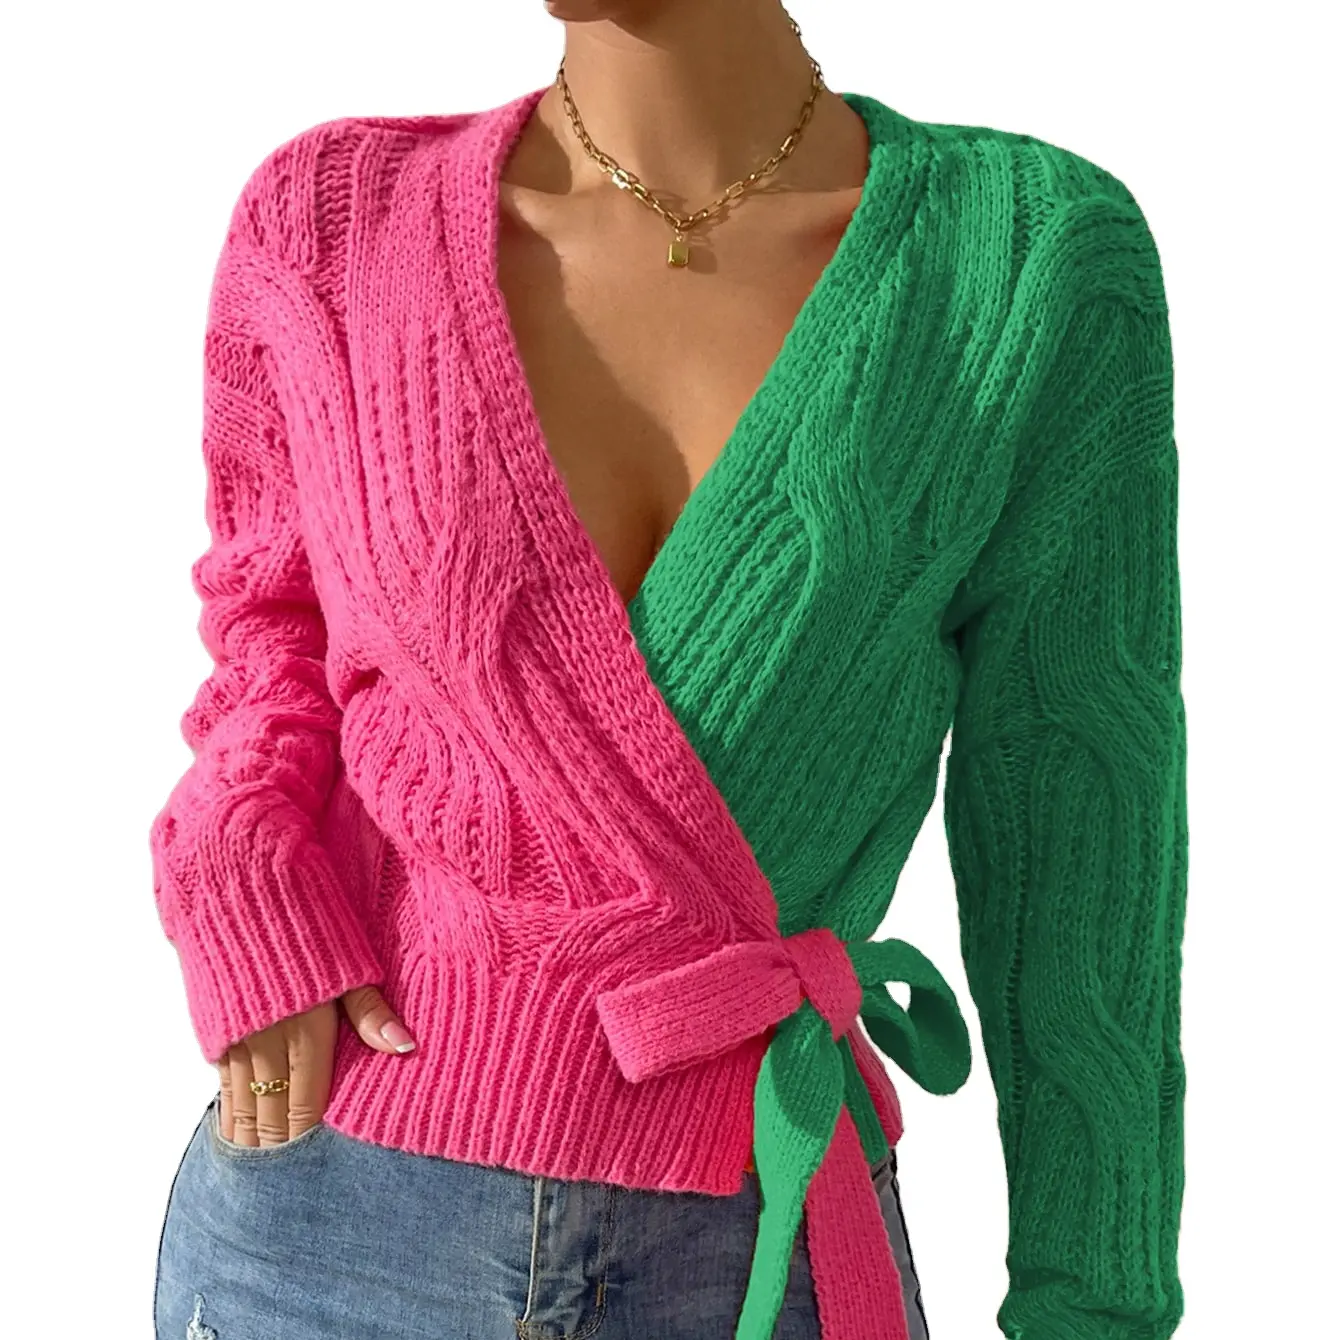 Benutzer definierte OEM ODM Hersteller Frauen Color block Multi color Pullover gestrickt Sorority rosa grün Cardigan